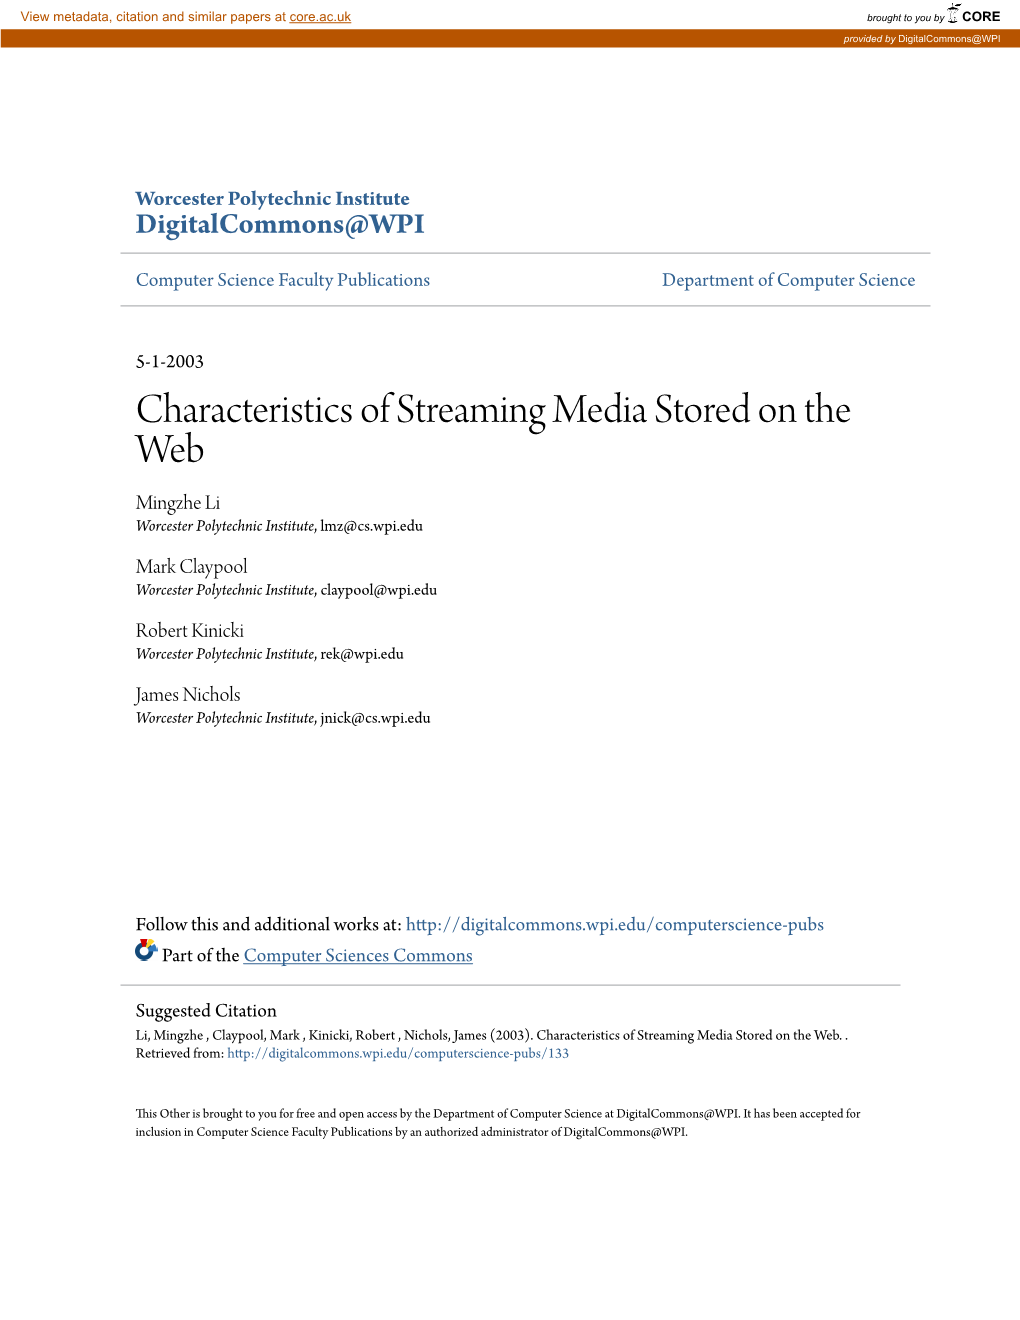 Characteristics of Streaming Media Stored on the Web Mingzhe Li Worcester Polytechnic Institute, Lmz@Cs.Wpi.Edu